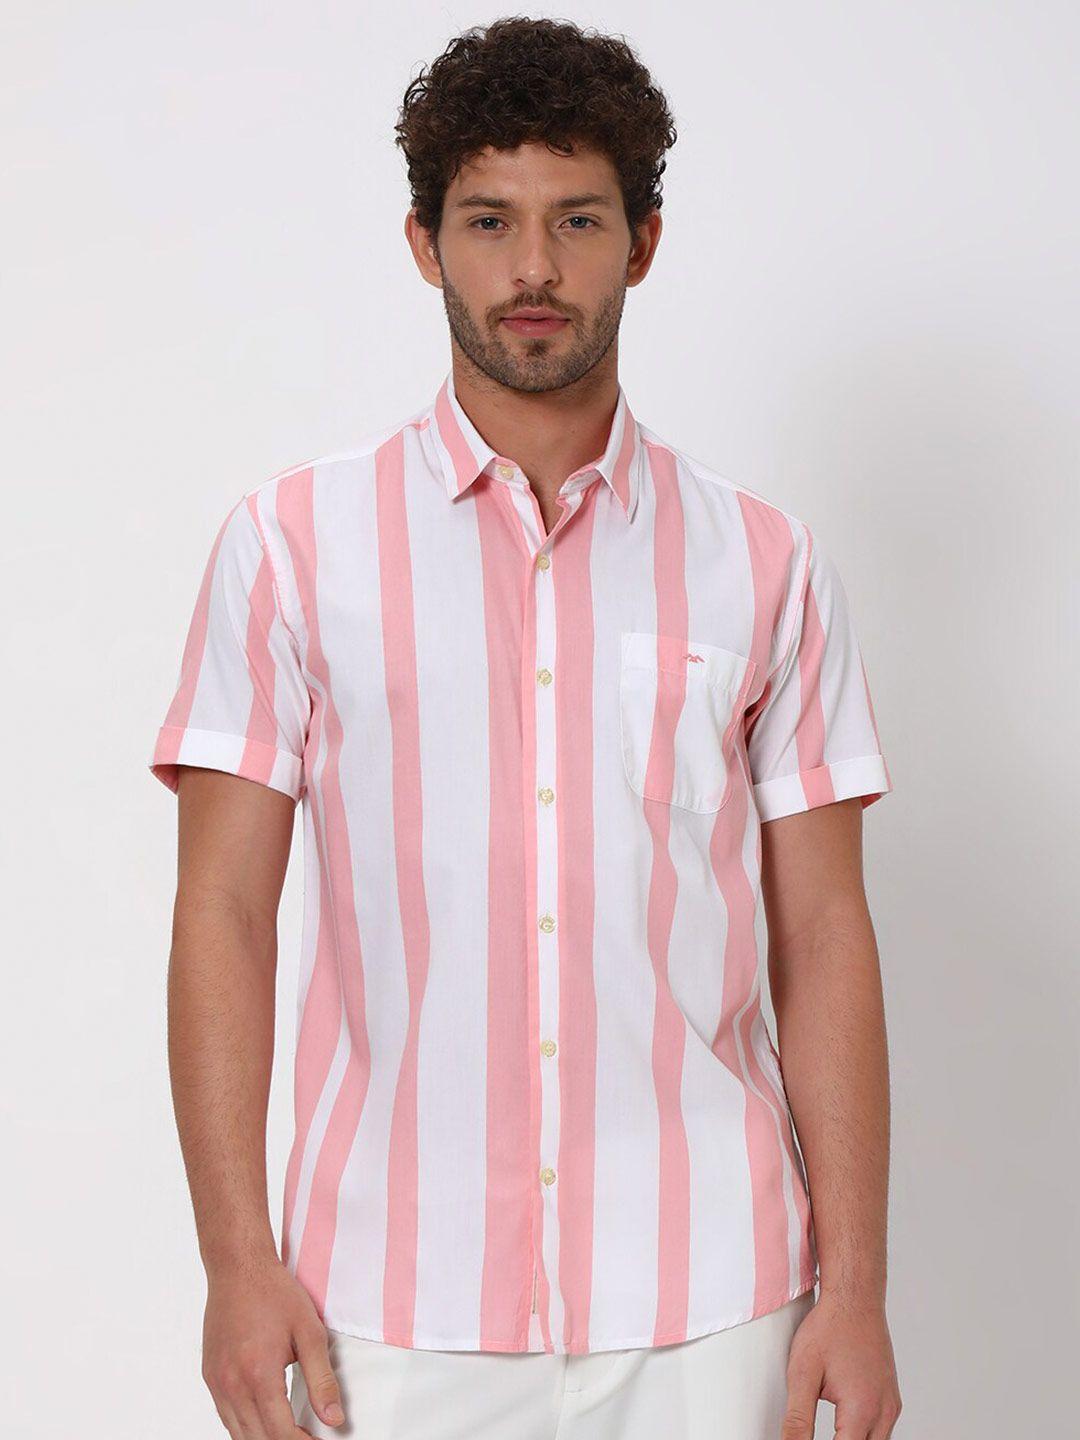 mufti slim fit vertical striped opaque casual shirt